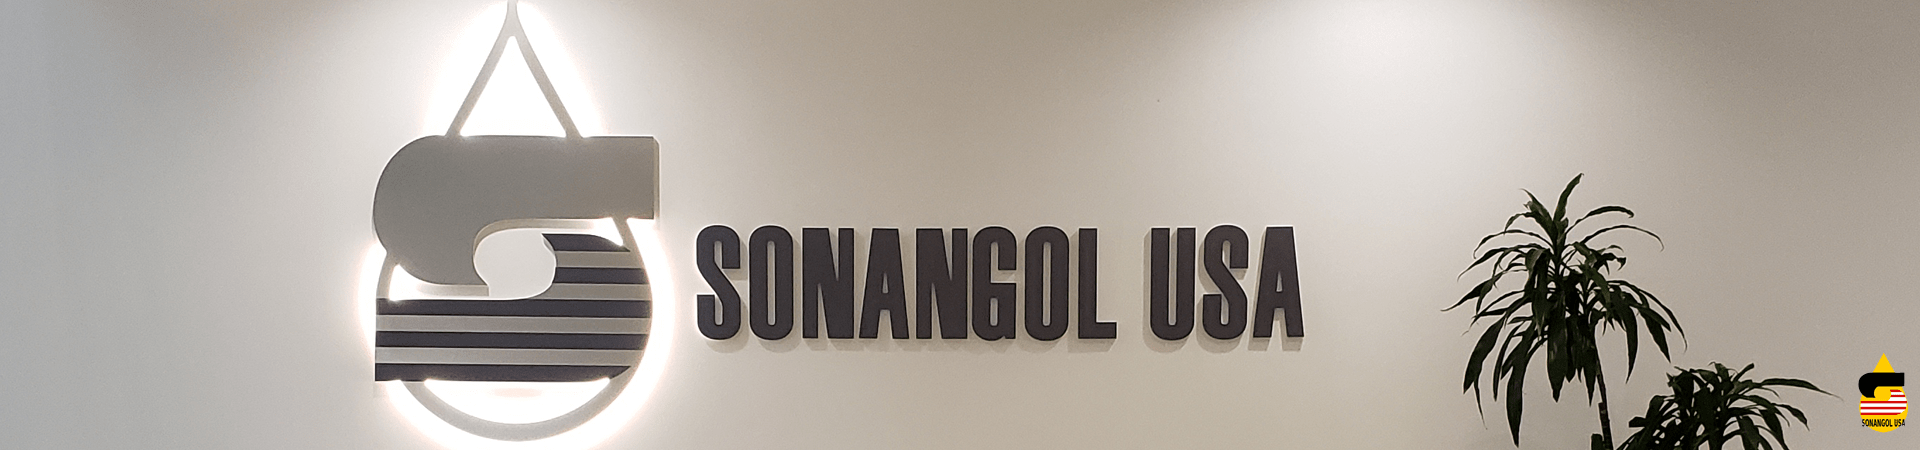 About Us, Sonangol USA Company, Houston, Texas